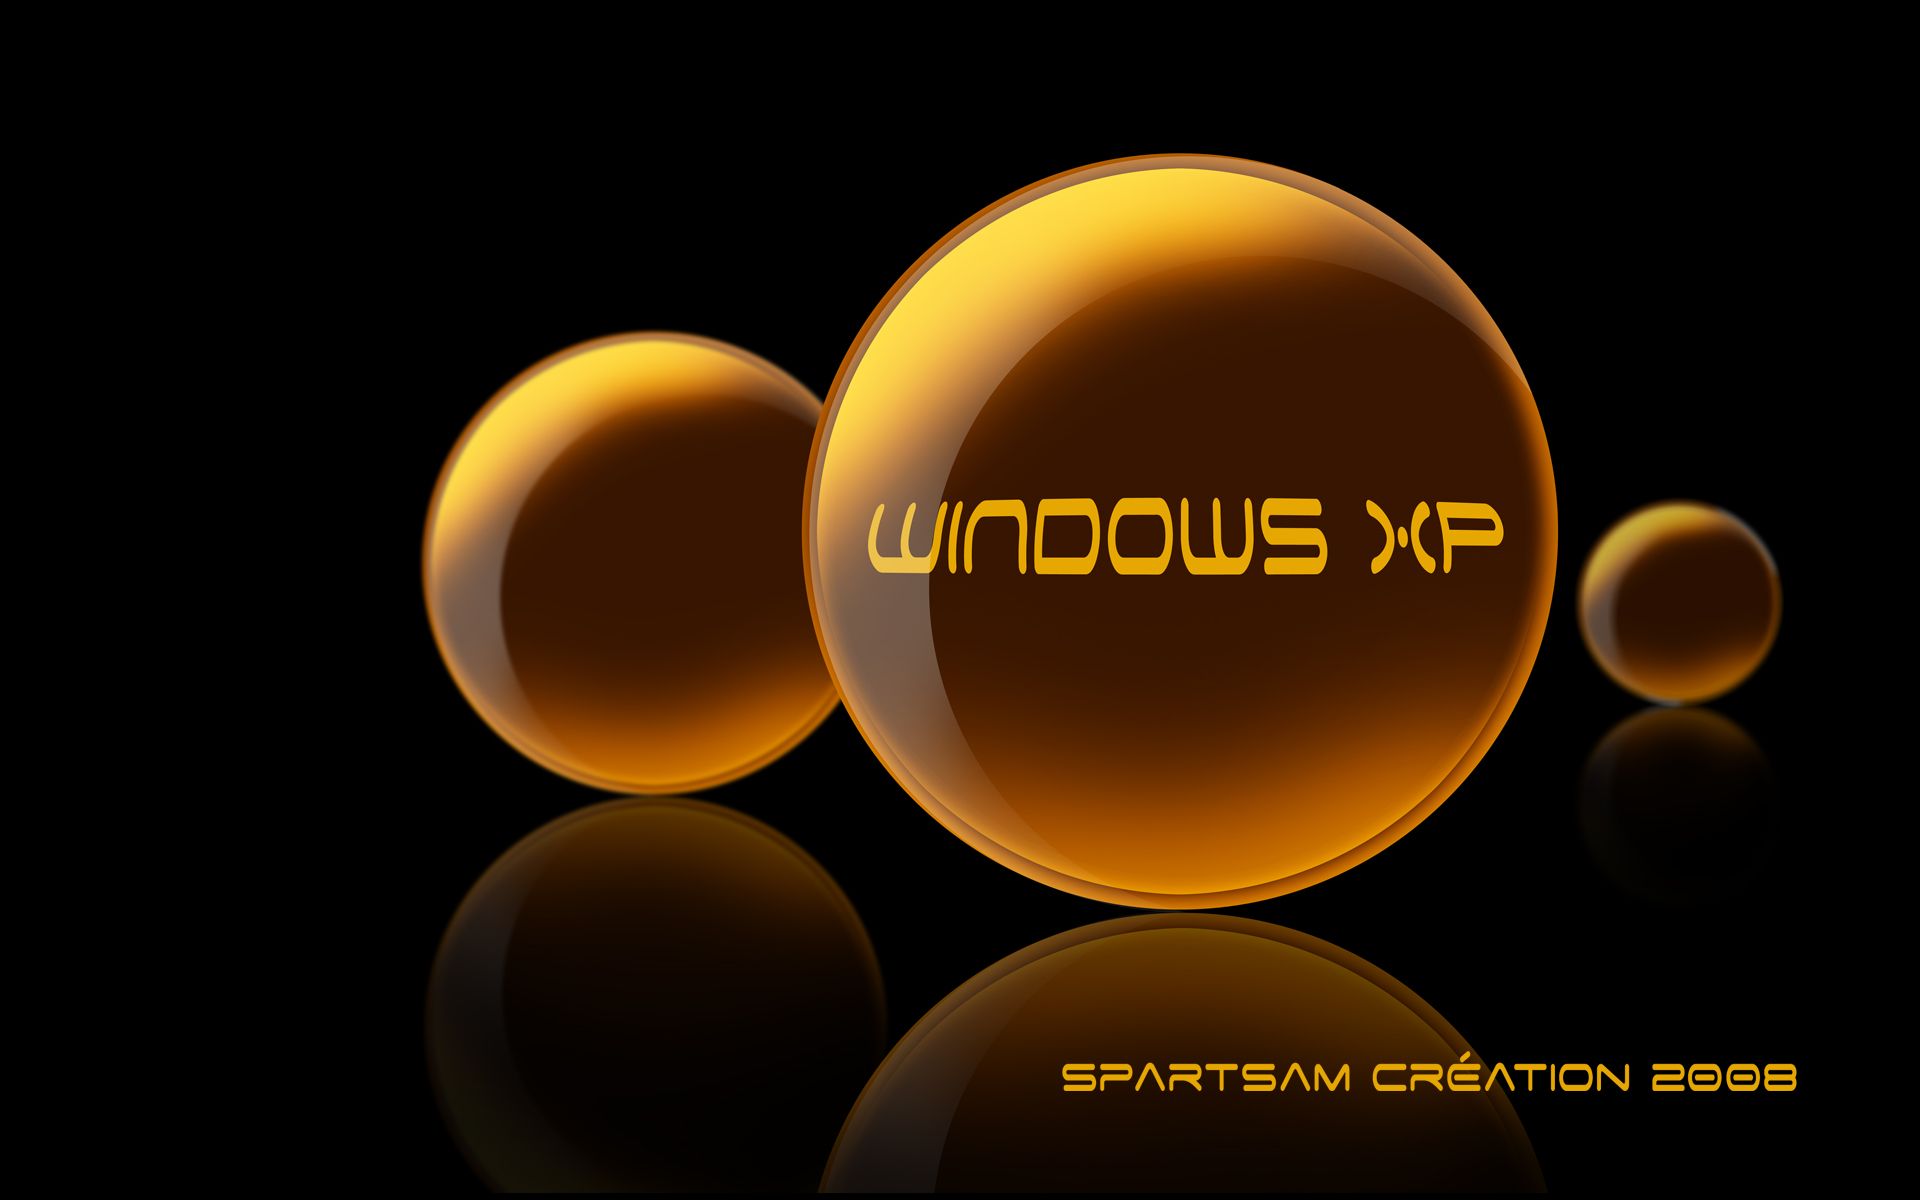 Windows xp wallpaper free download i3